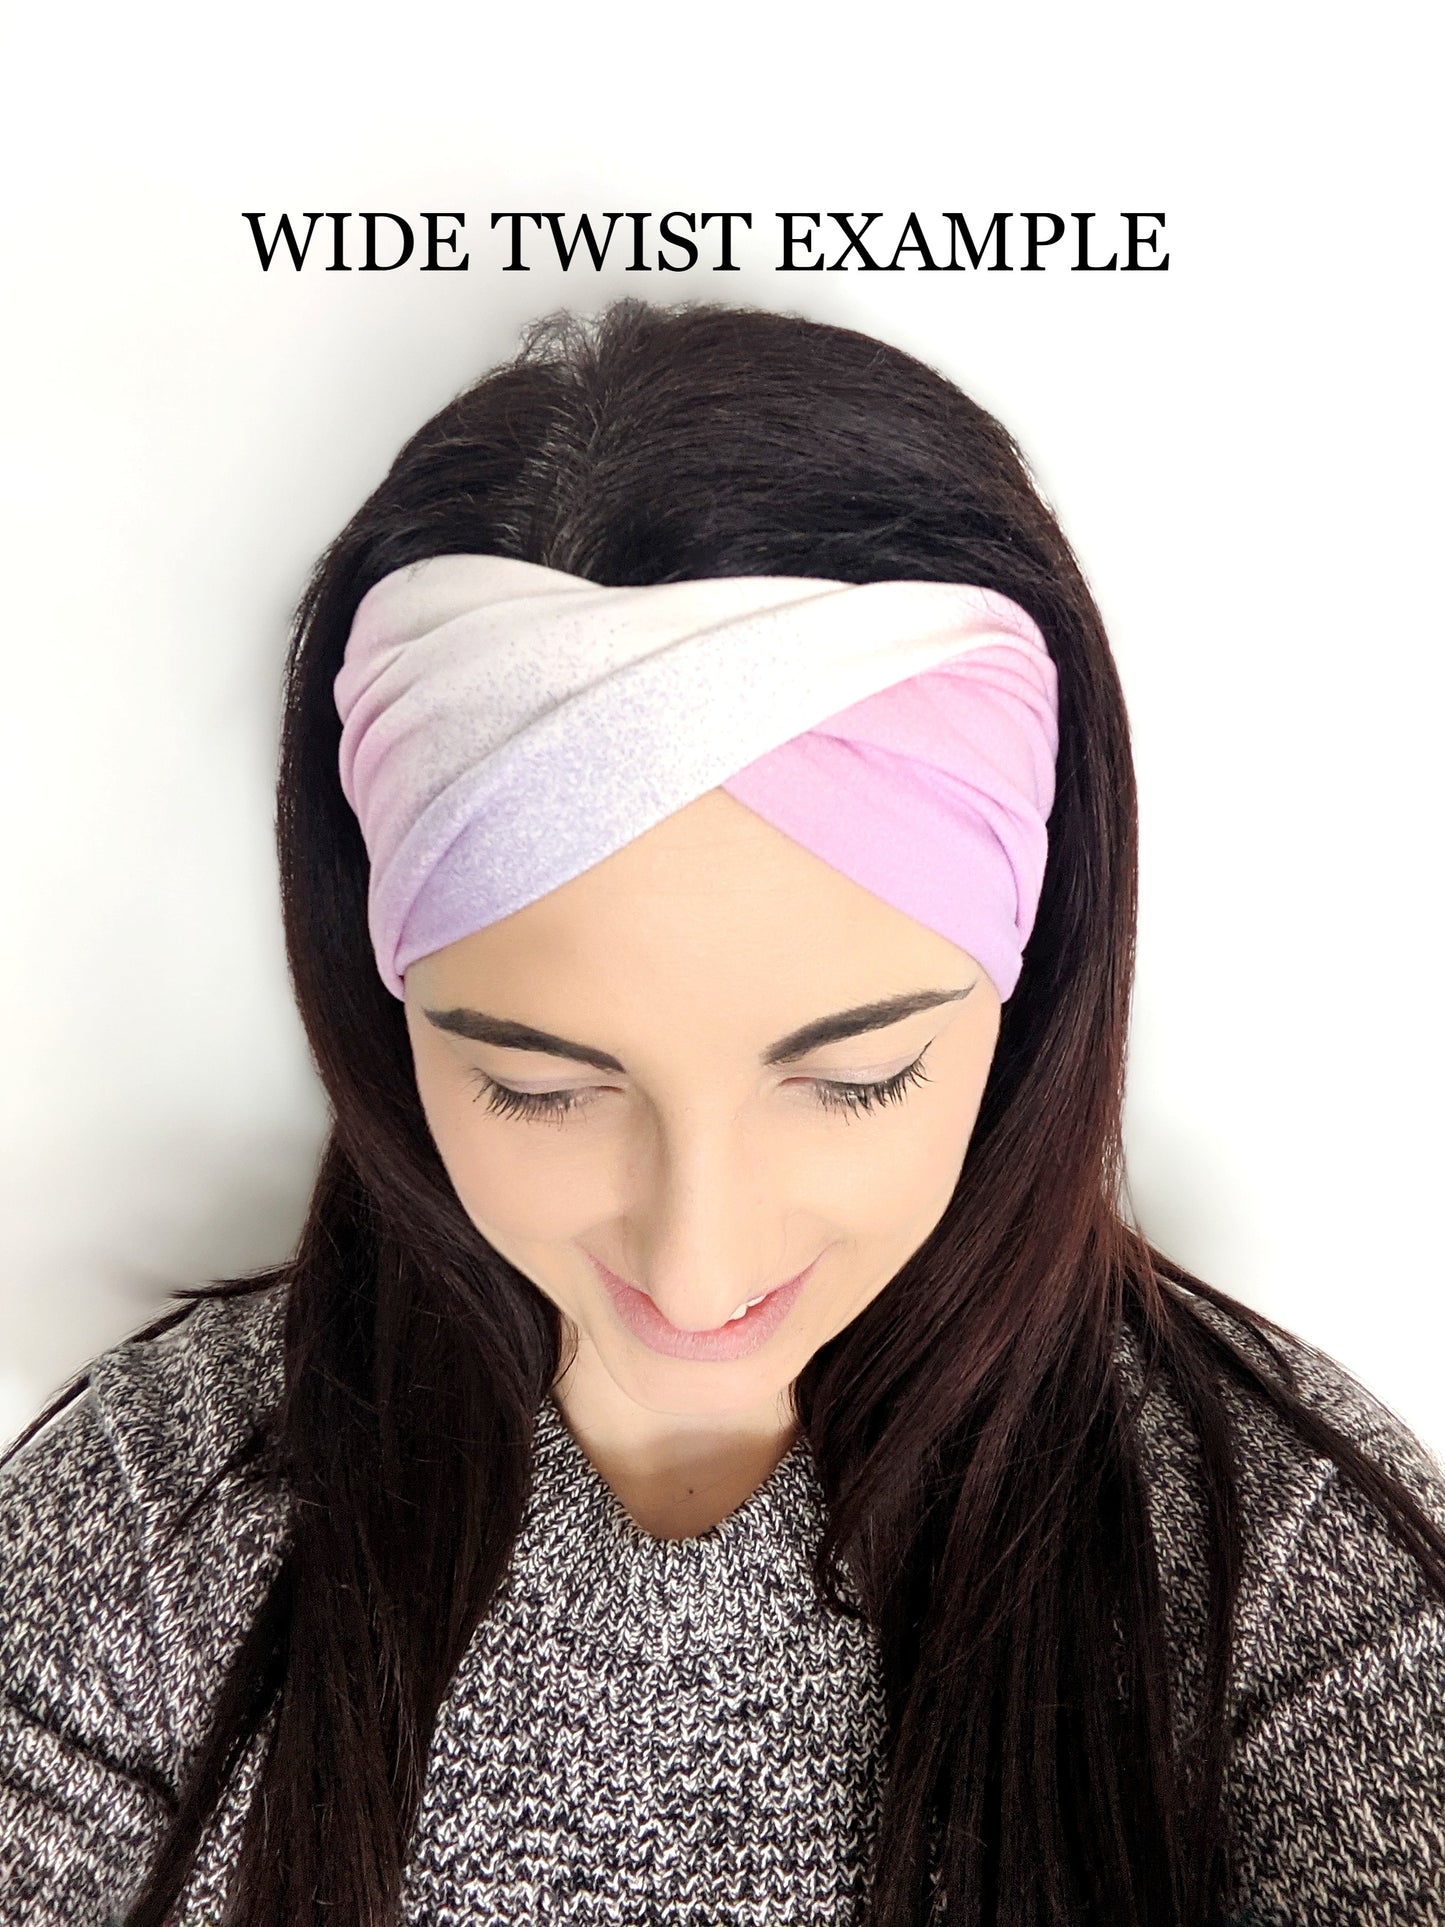 Rustic Medical Headband for Women | WIDE OR TURBAN TWIST